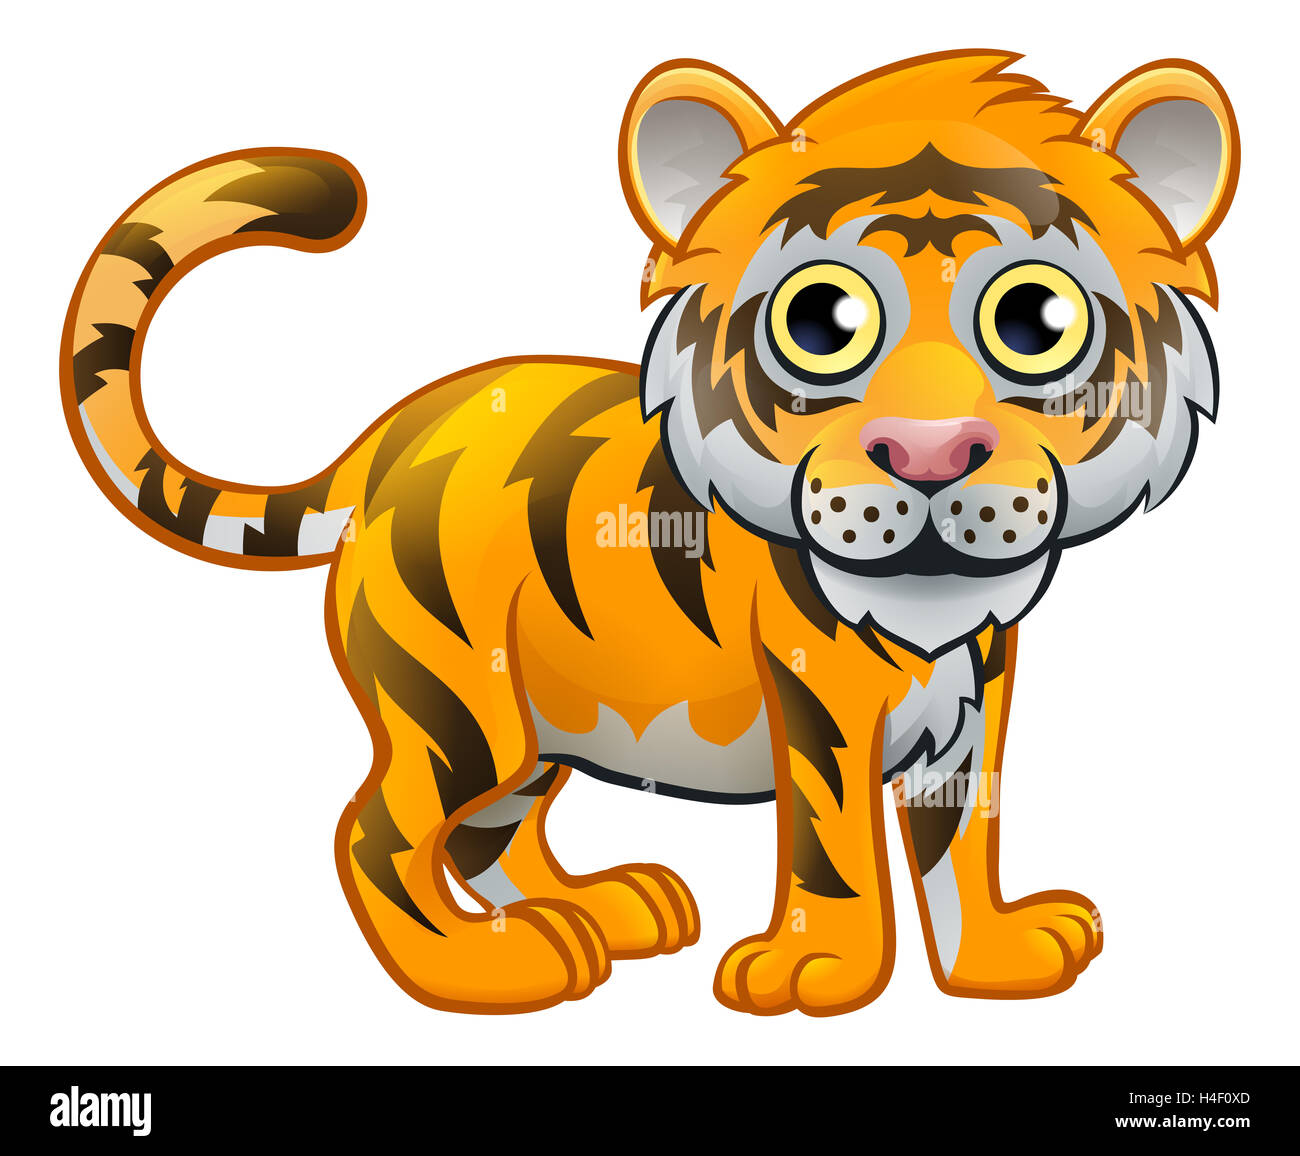 A cute tiger safari animal cartoon character Stock Photo